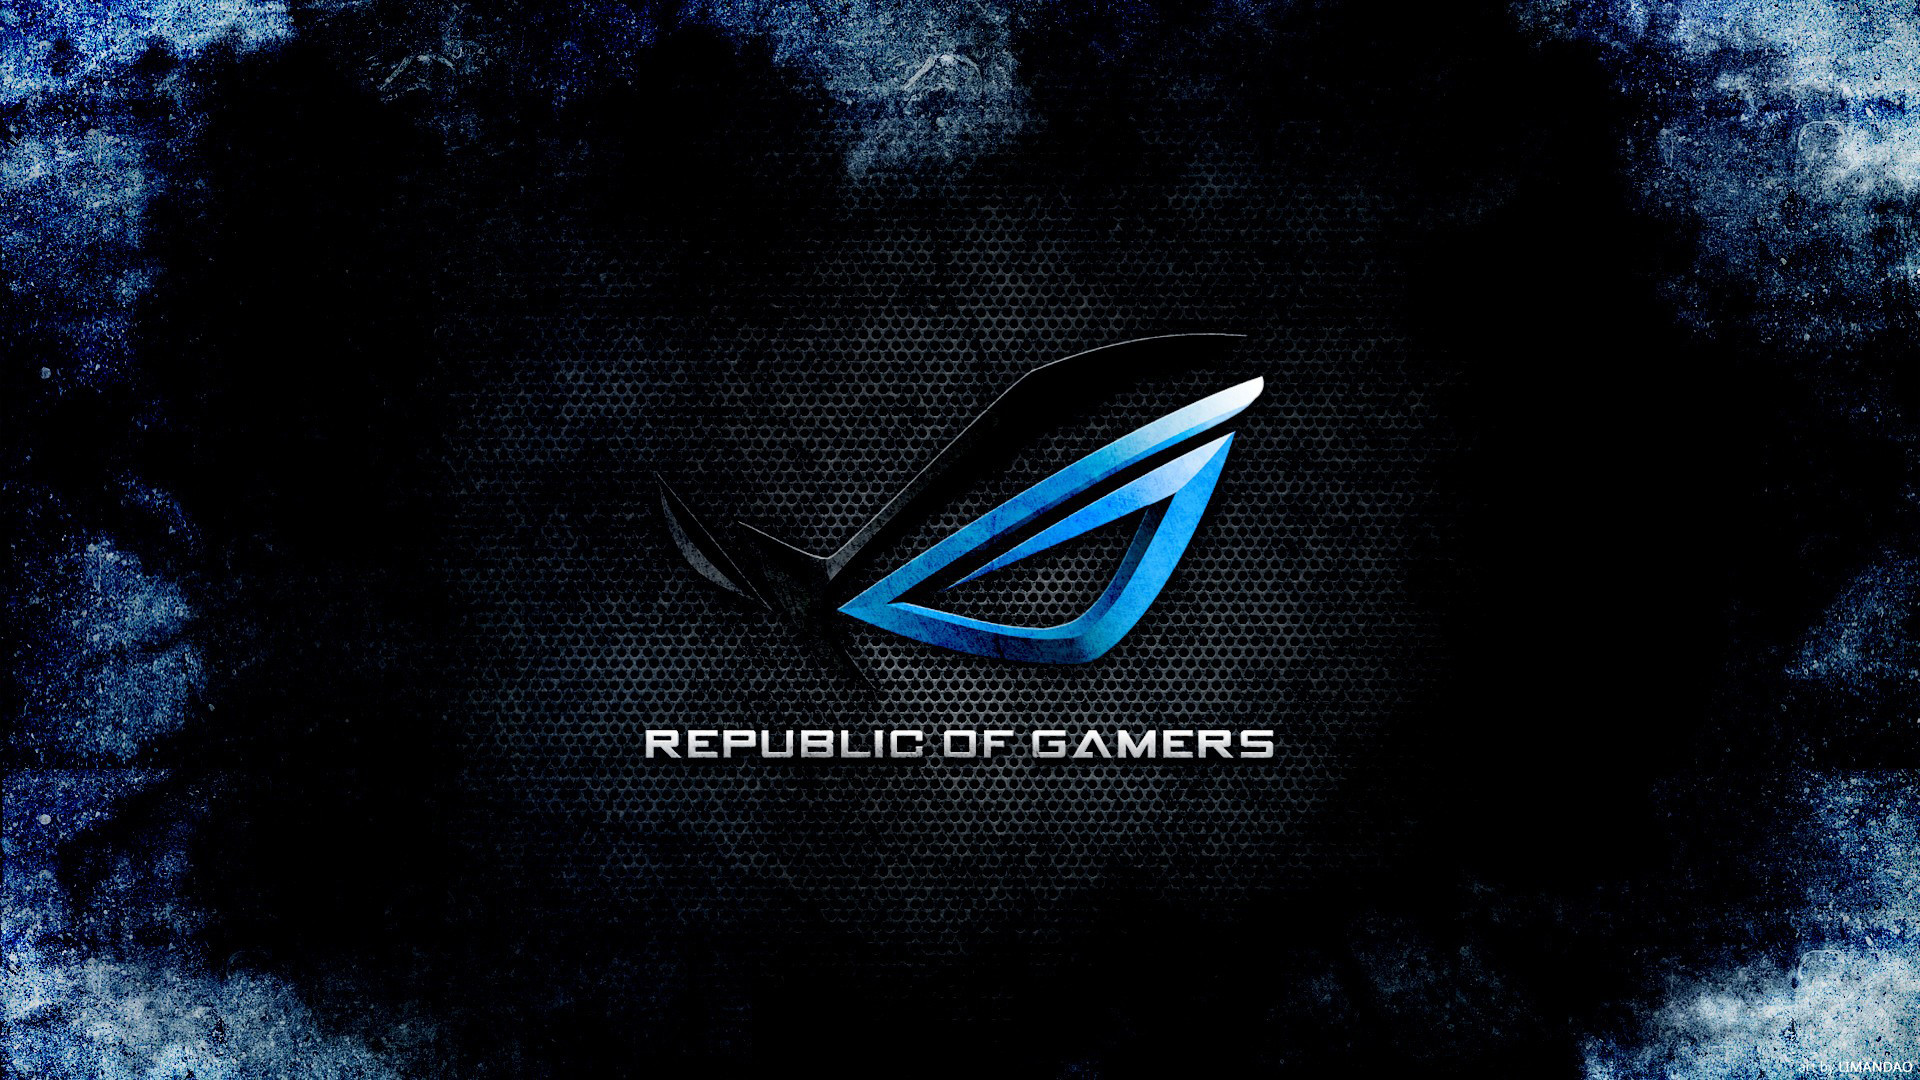 Rog republic of gamers logo dark blue hd. 1080p wallpaper